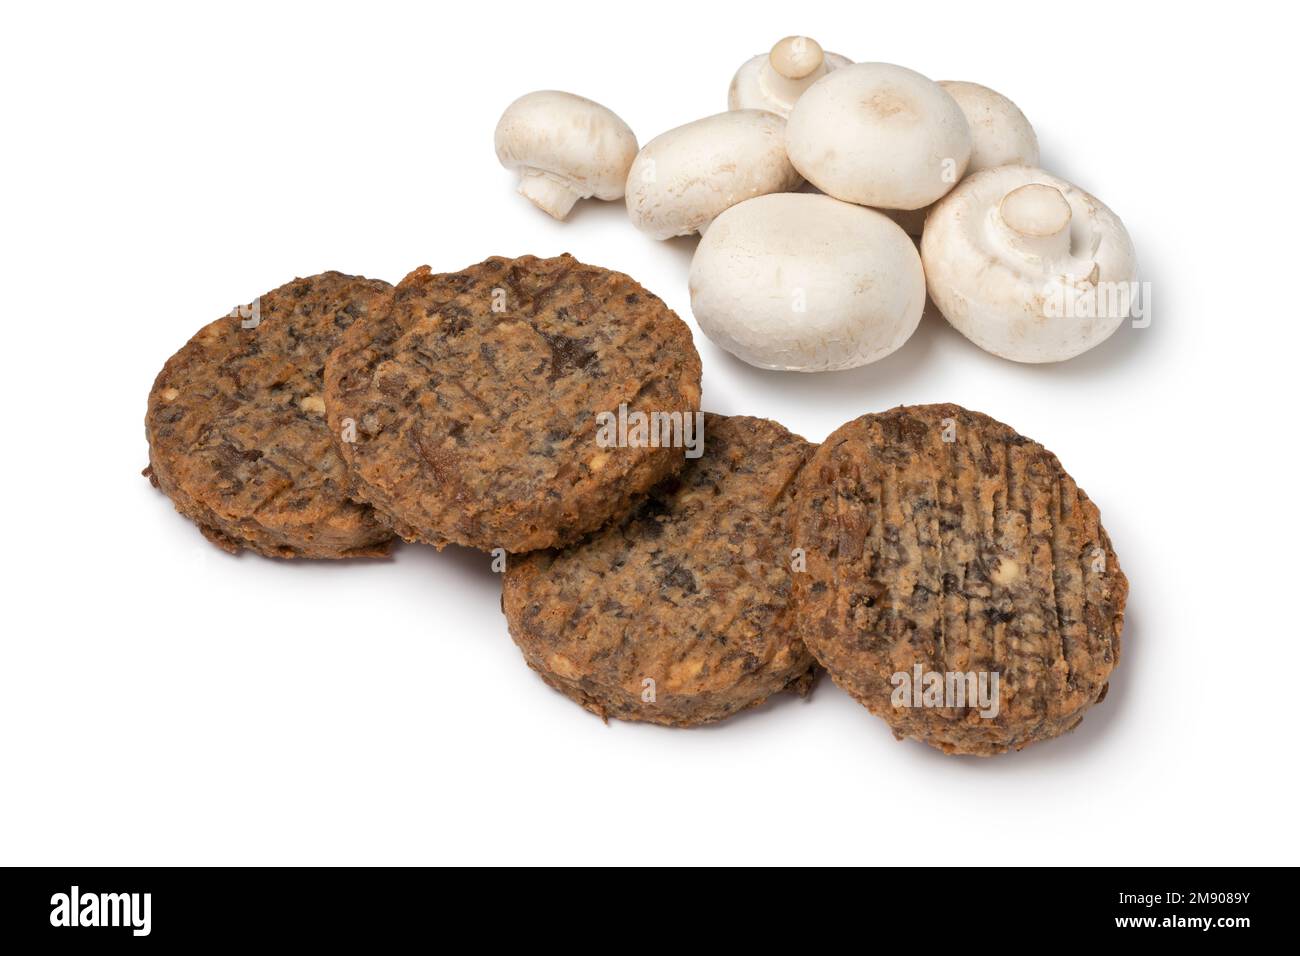 Fresh baked champignon burgers and mushrooms close up isolated on white background Stock Photo